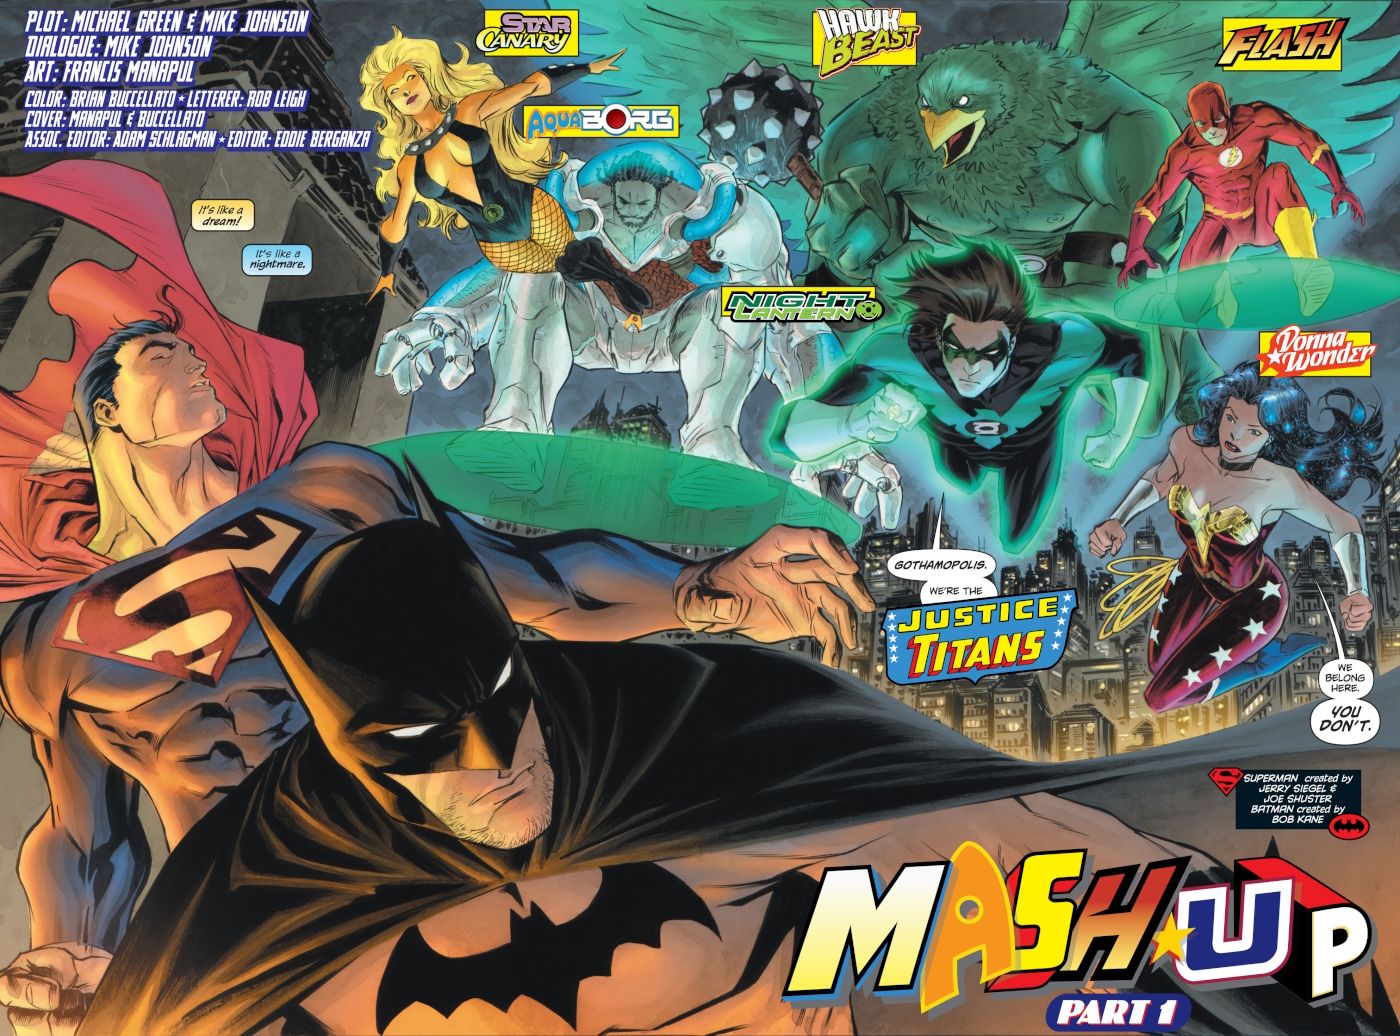 The Justice Titans Confront Batman and Superman